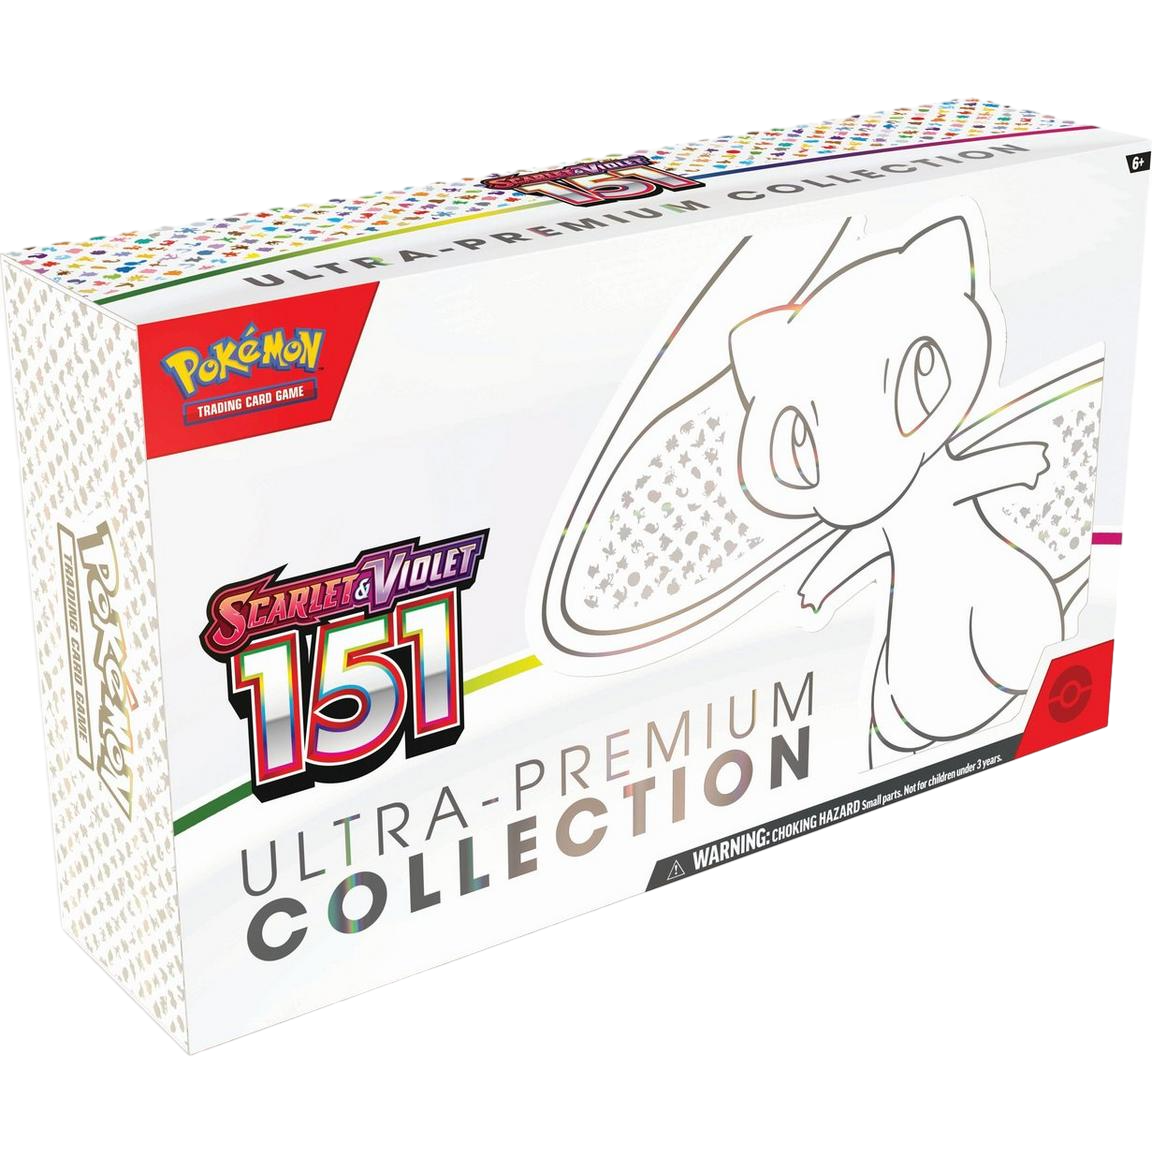 Pokémon TCG: Scarlet & Violet - 151 Collection - Ultra Premium